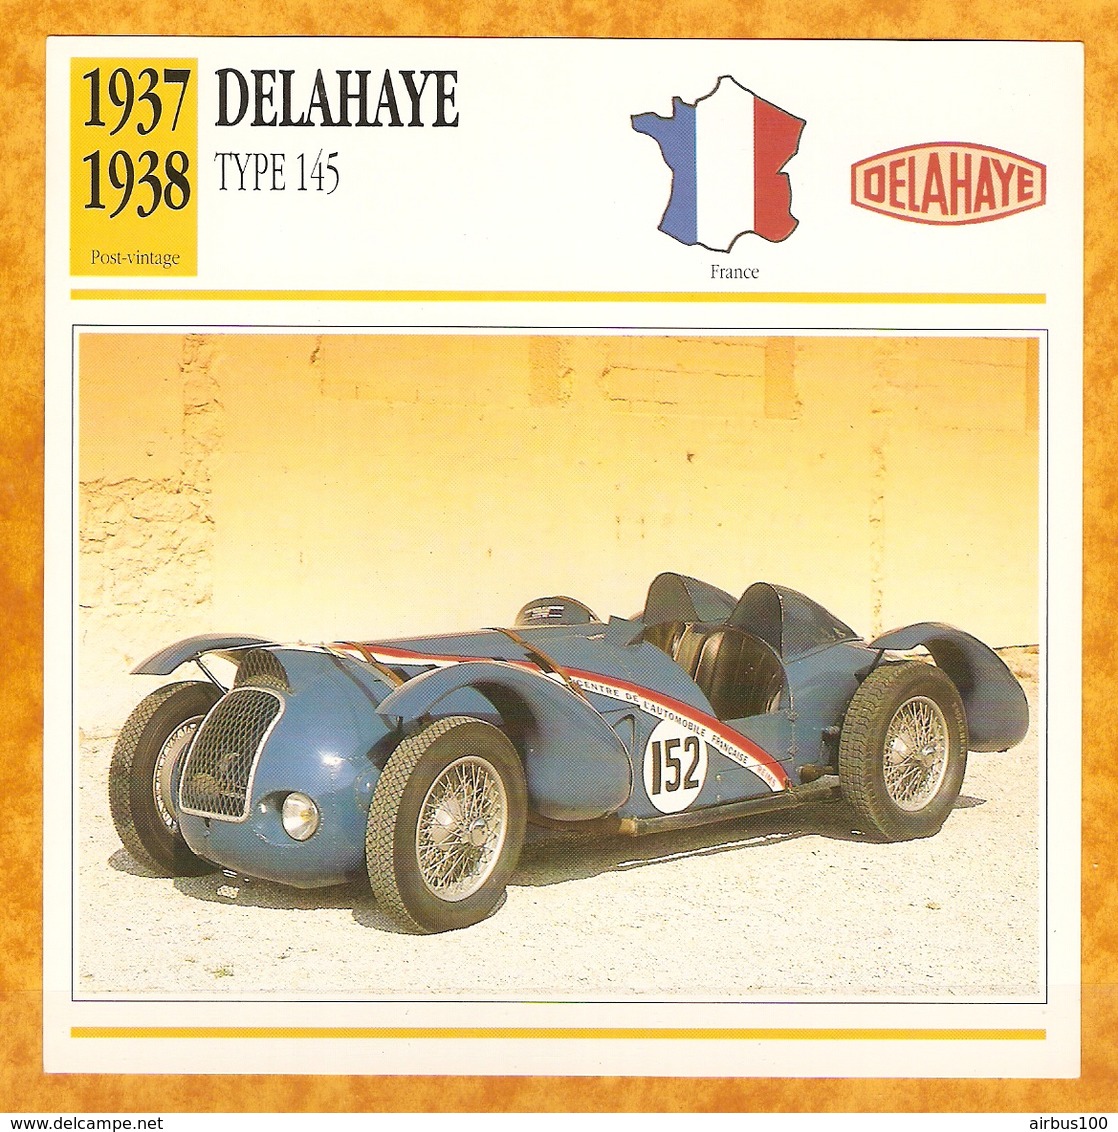 1937 FRANCE VIEILLE VOITURE DELAHAYE TYPE 145 - FRANCE OLD CAR - FRANCIA VIEJO COCHE - VECCHIA MACCHINA - Automobili